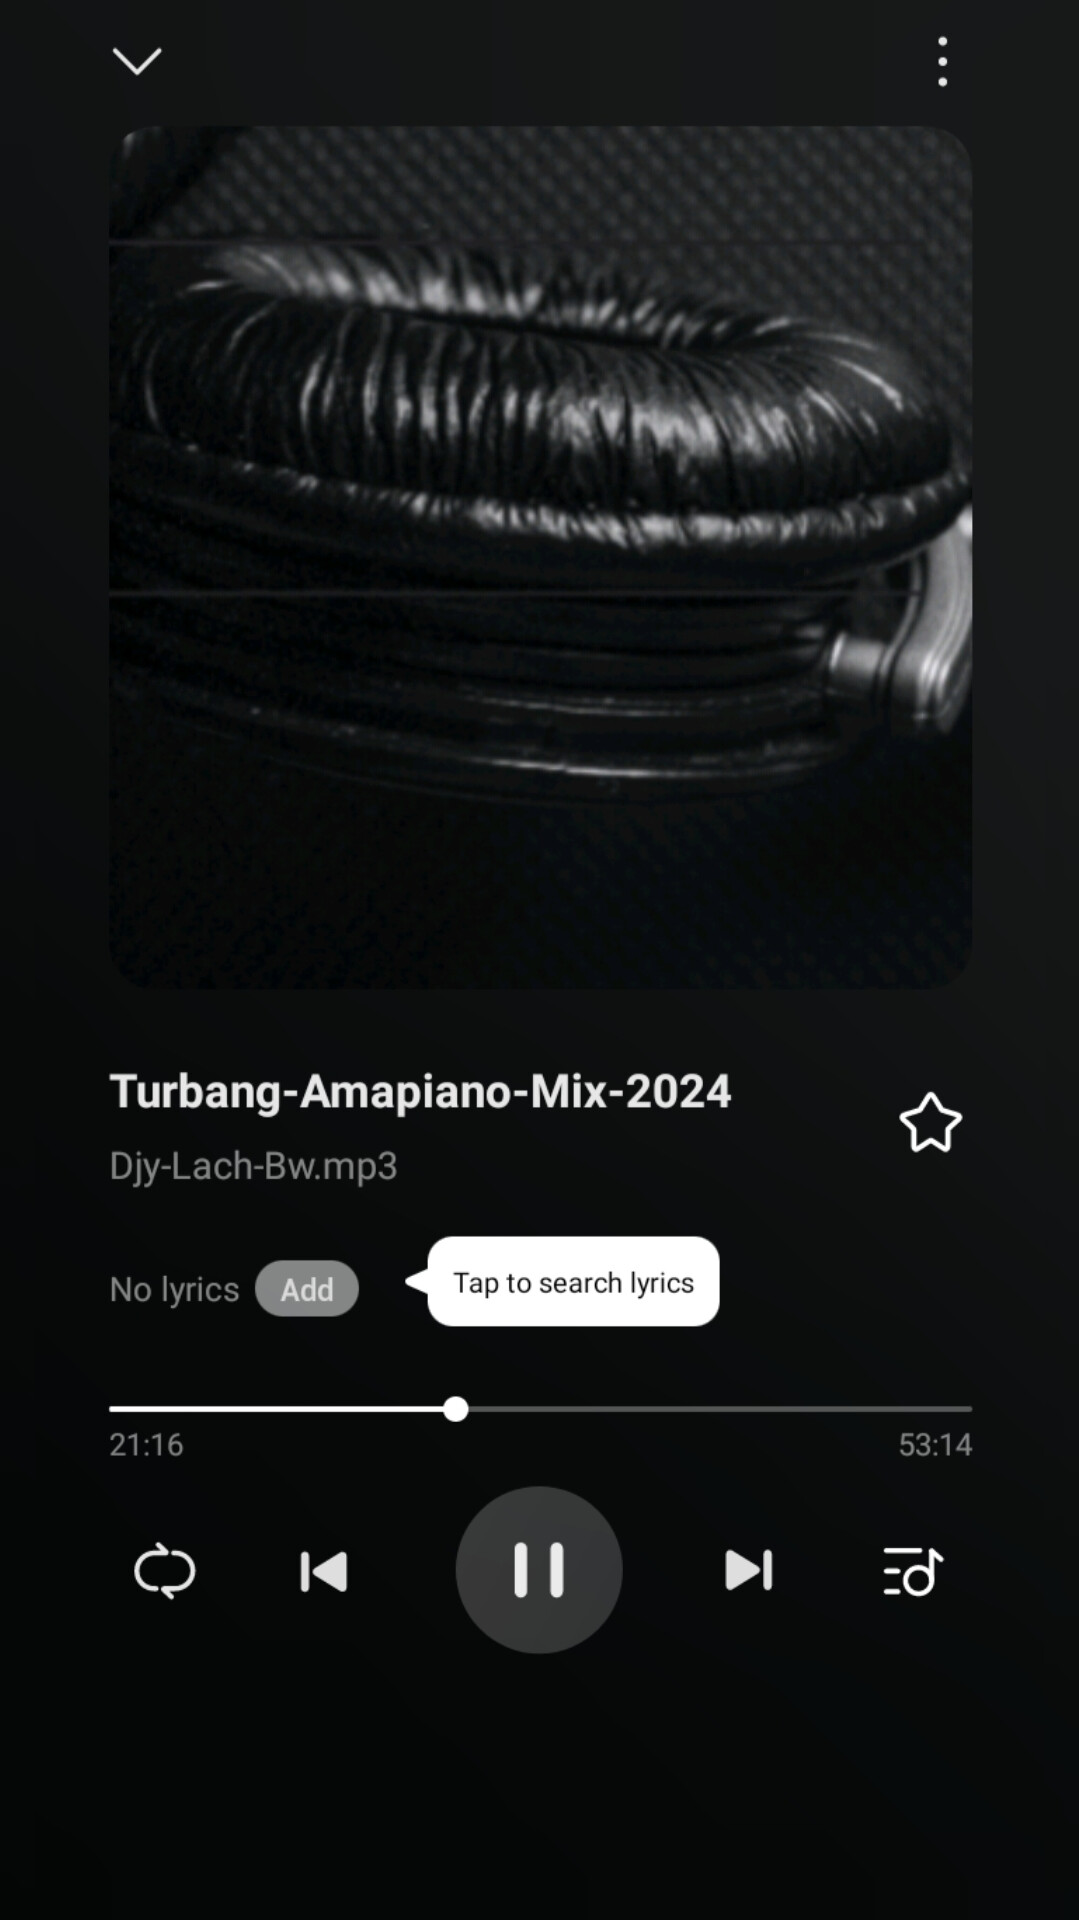 Turban-Amapiano-Mix-2024 - Djy-Lach-Bw